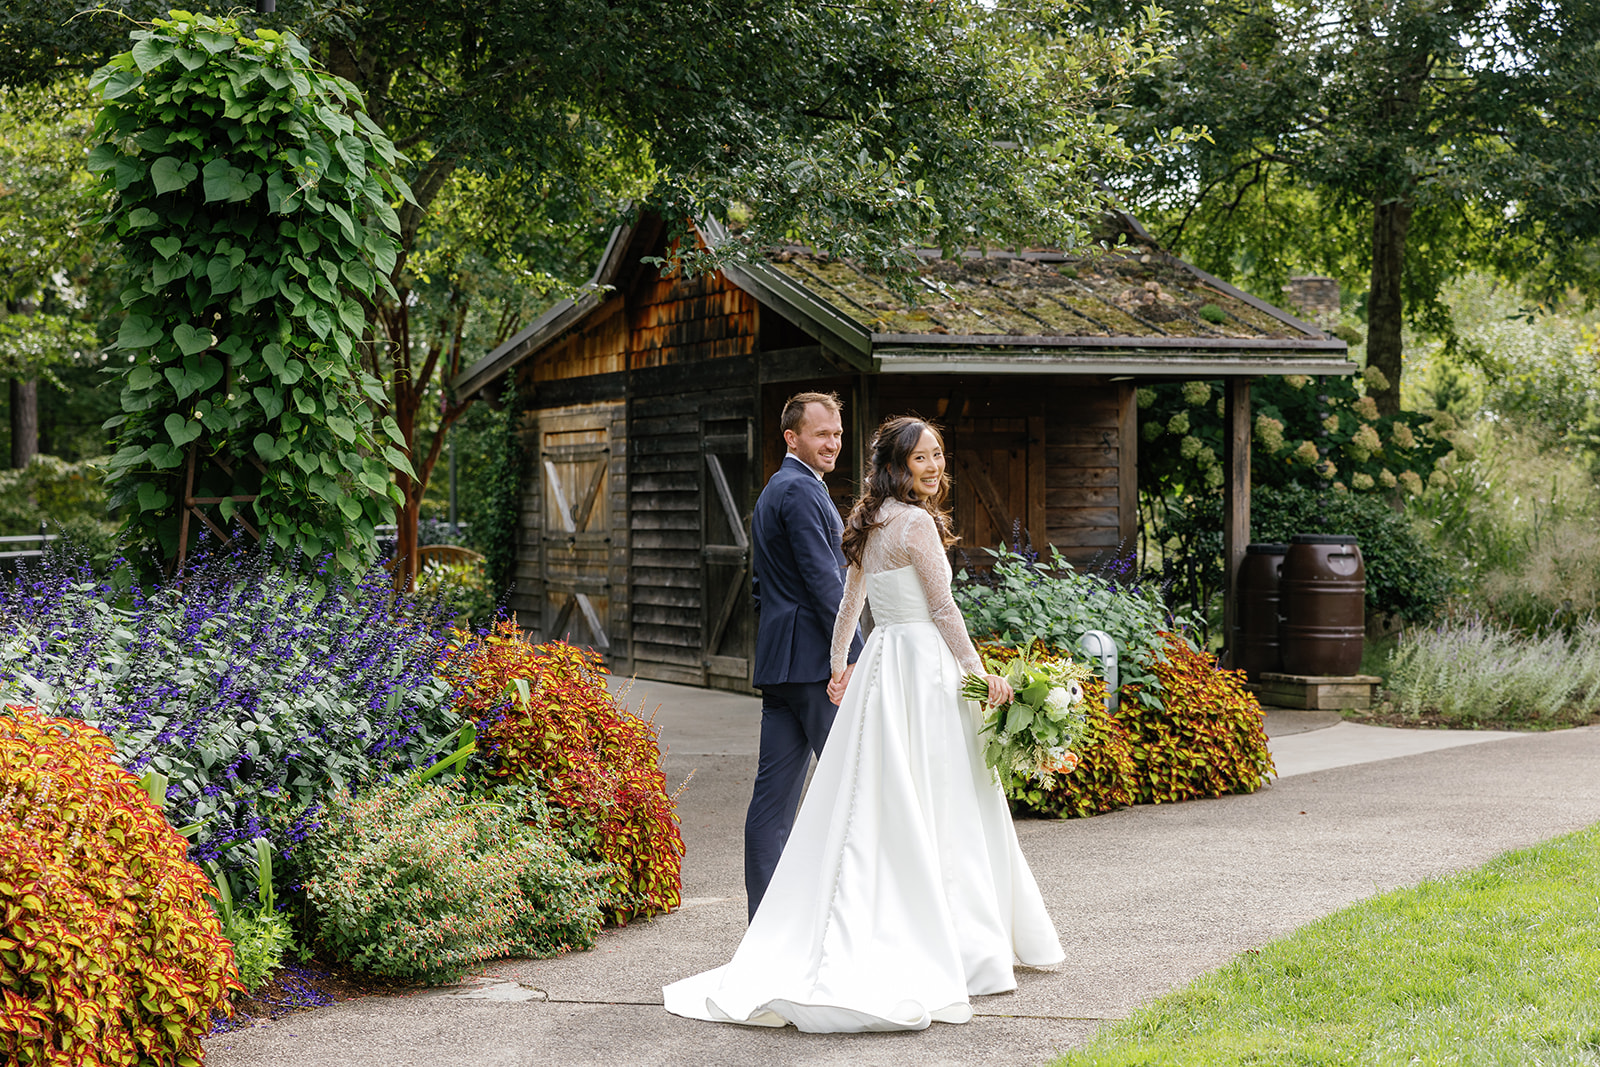 Bridea and groom at garden wedding at the NC arboretum 